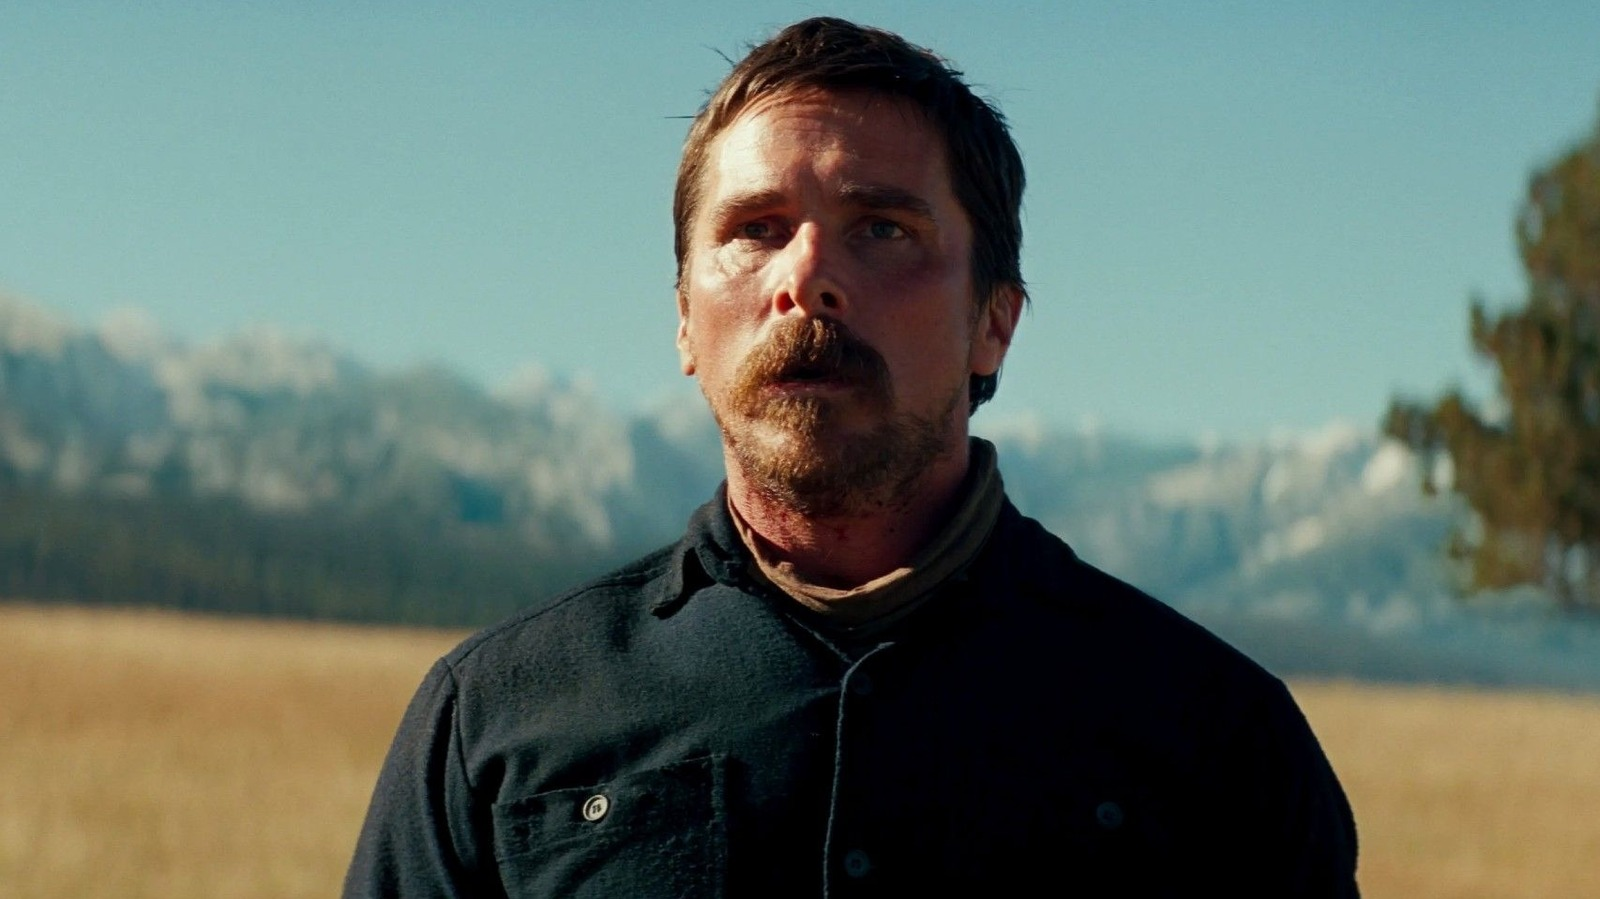 Christian Bale Teams Up with Edgar Allan Poe in Pale Blue Eye Trailer